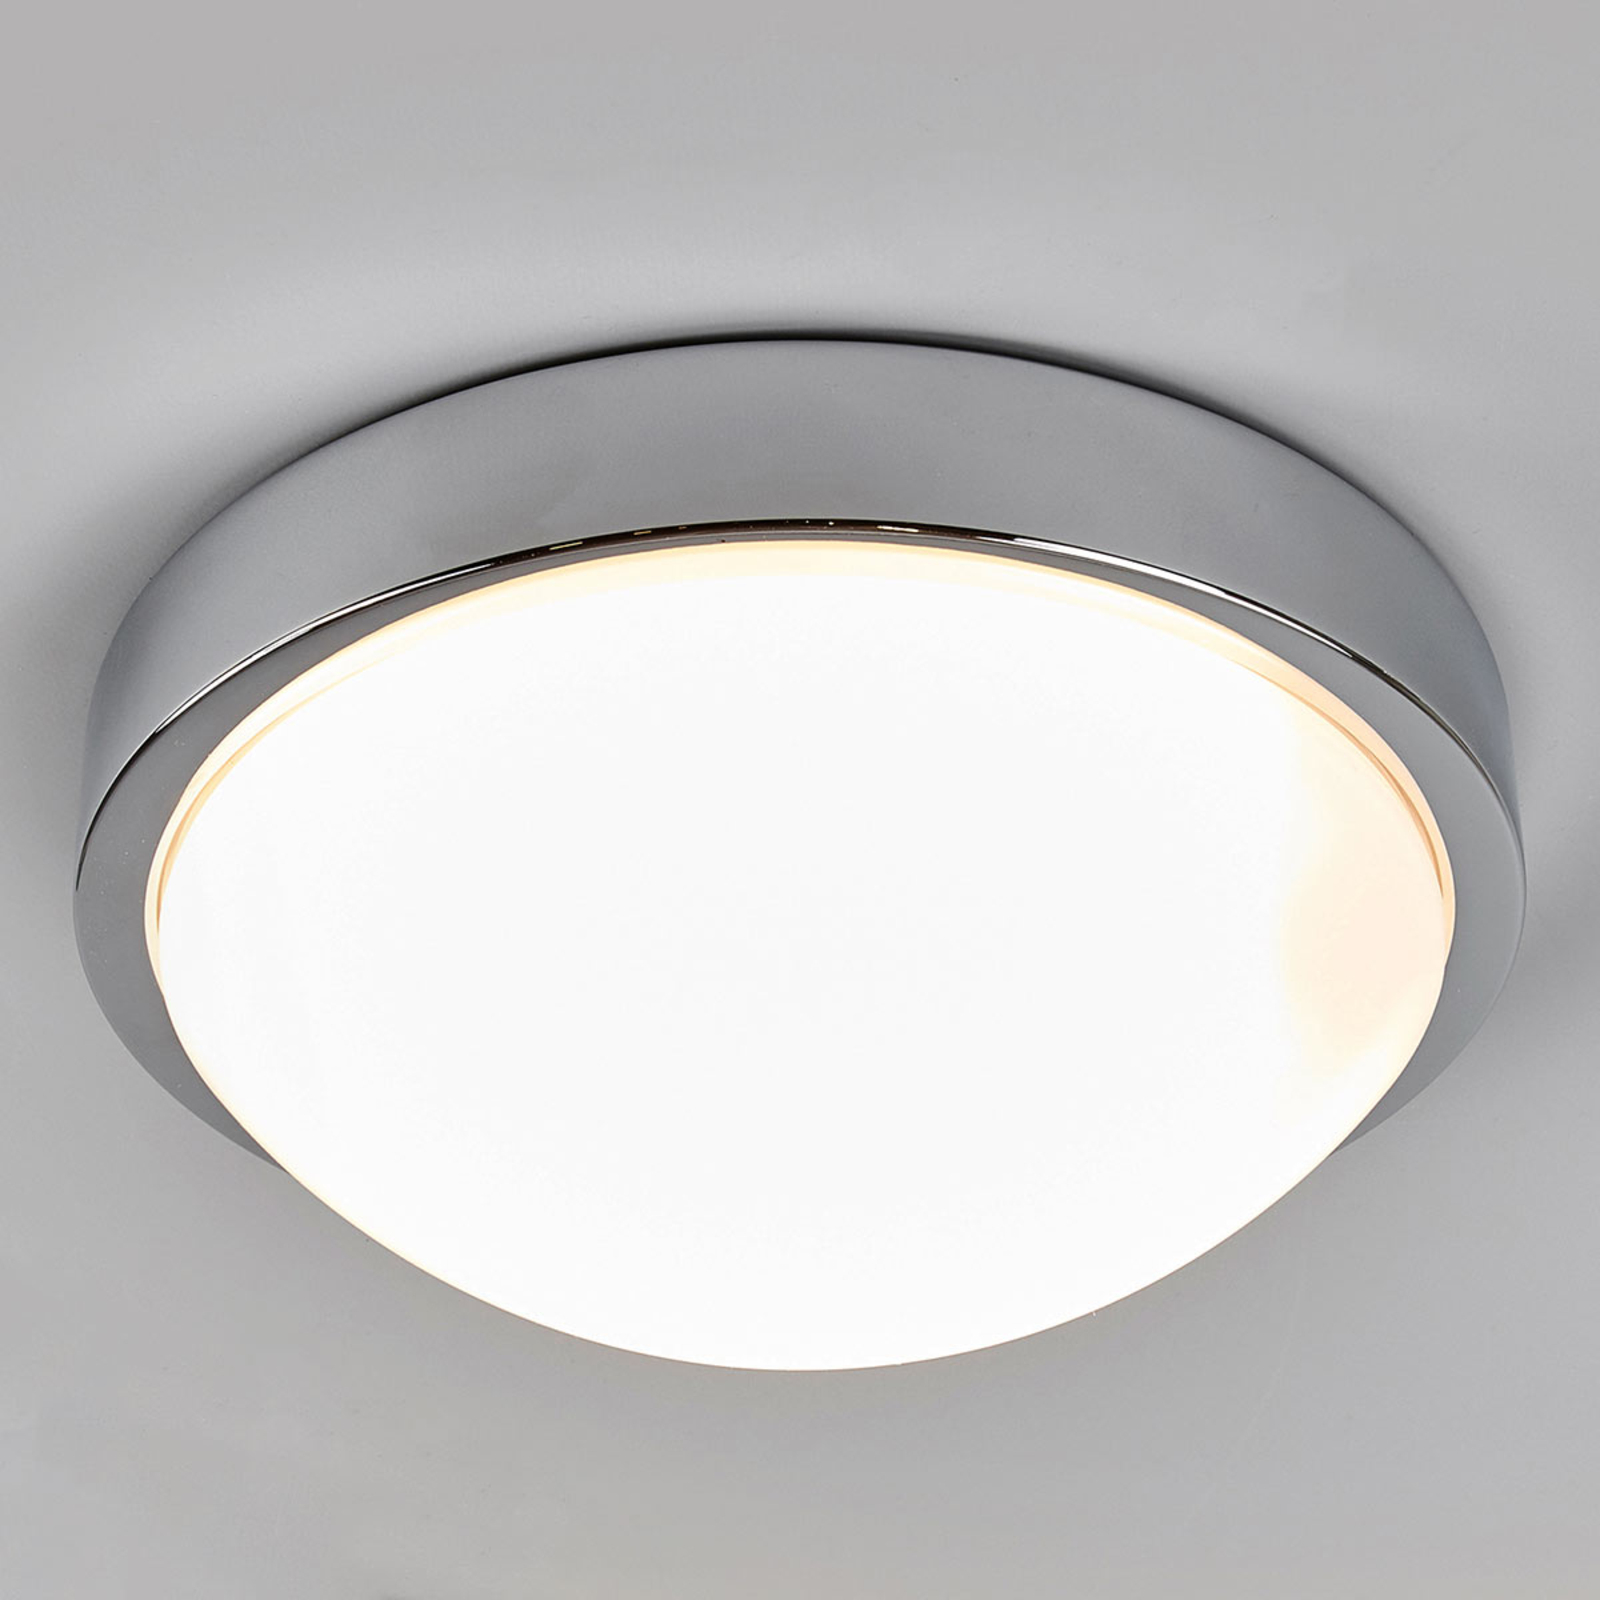 Chrome-plated bathroom ceiling lamp Elucio, IP44